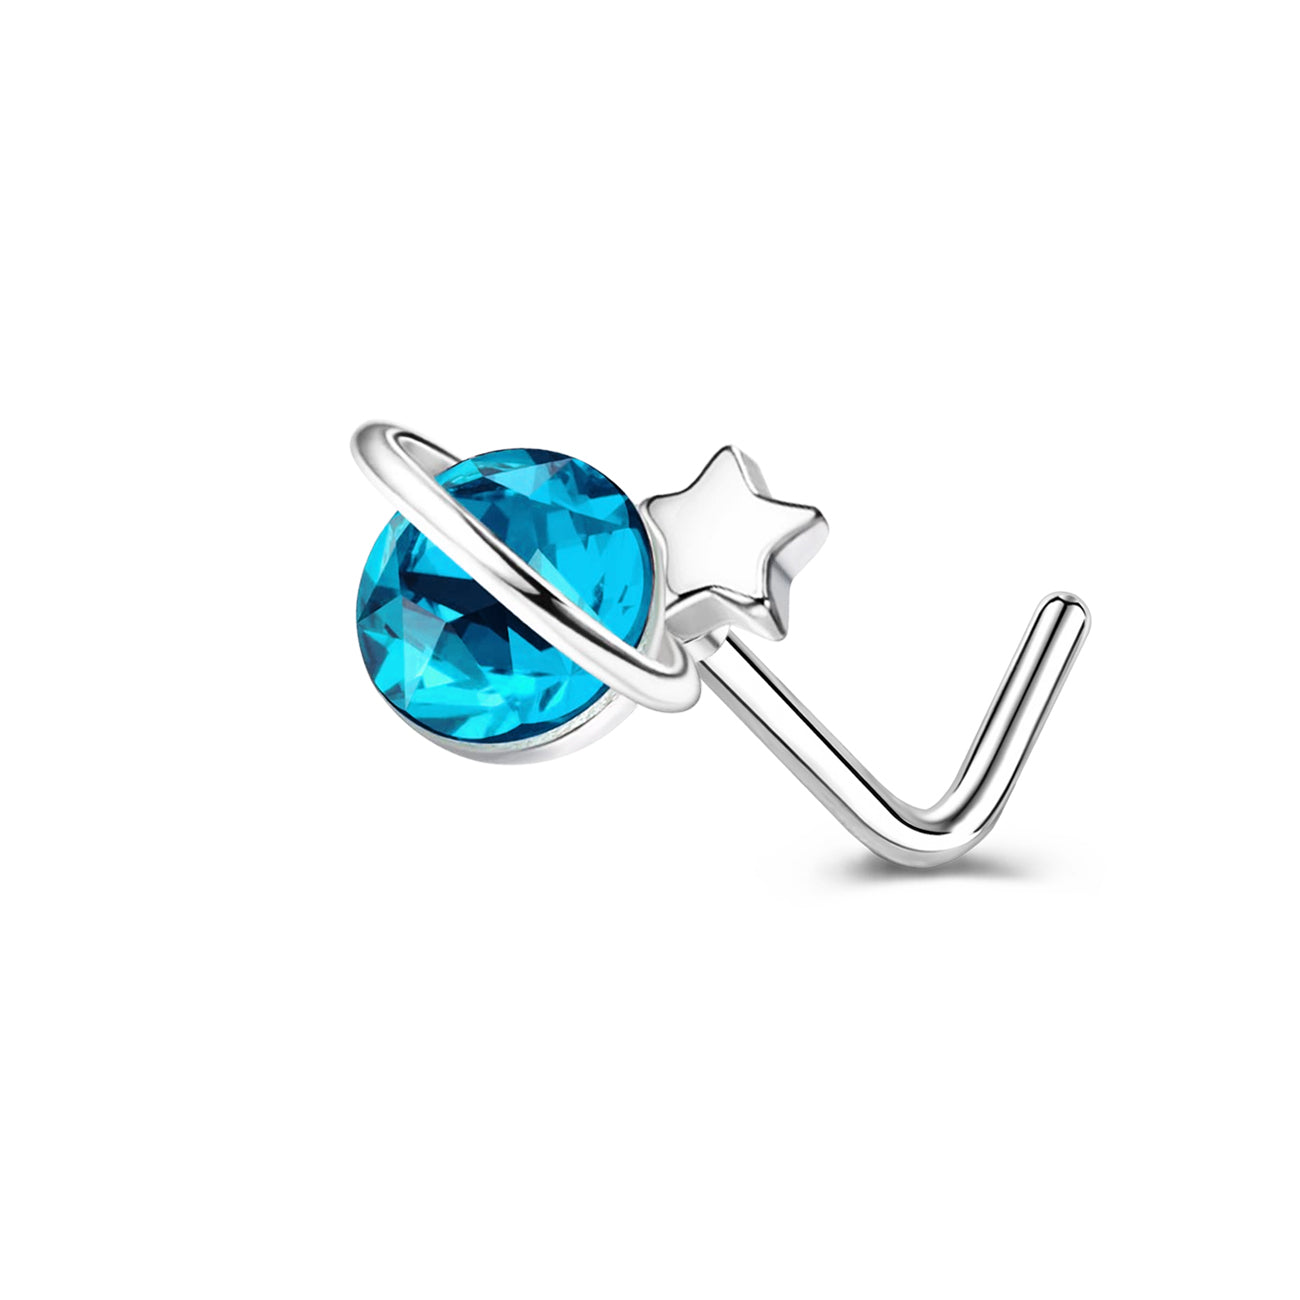 20g-copper-star-nose-stud-piercing-l-shaped-nostril-piercing-blue-crystal-nose-ring